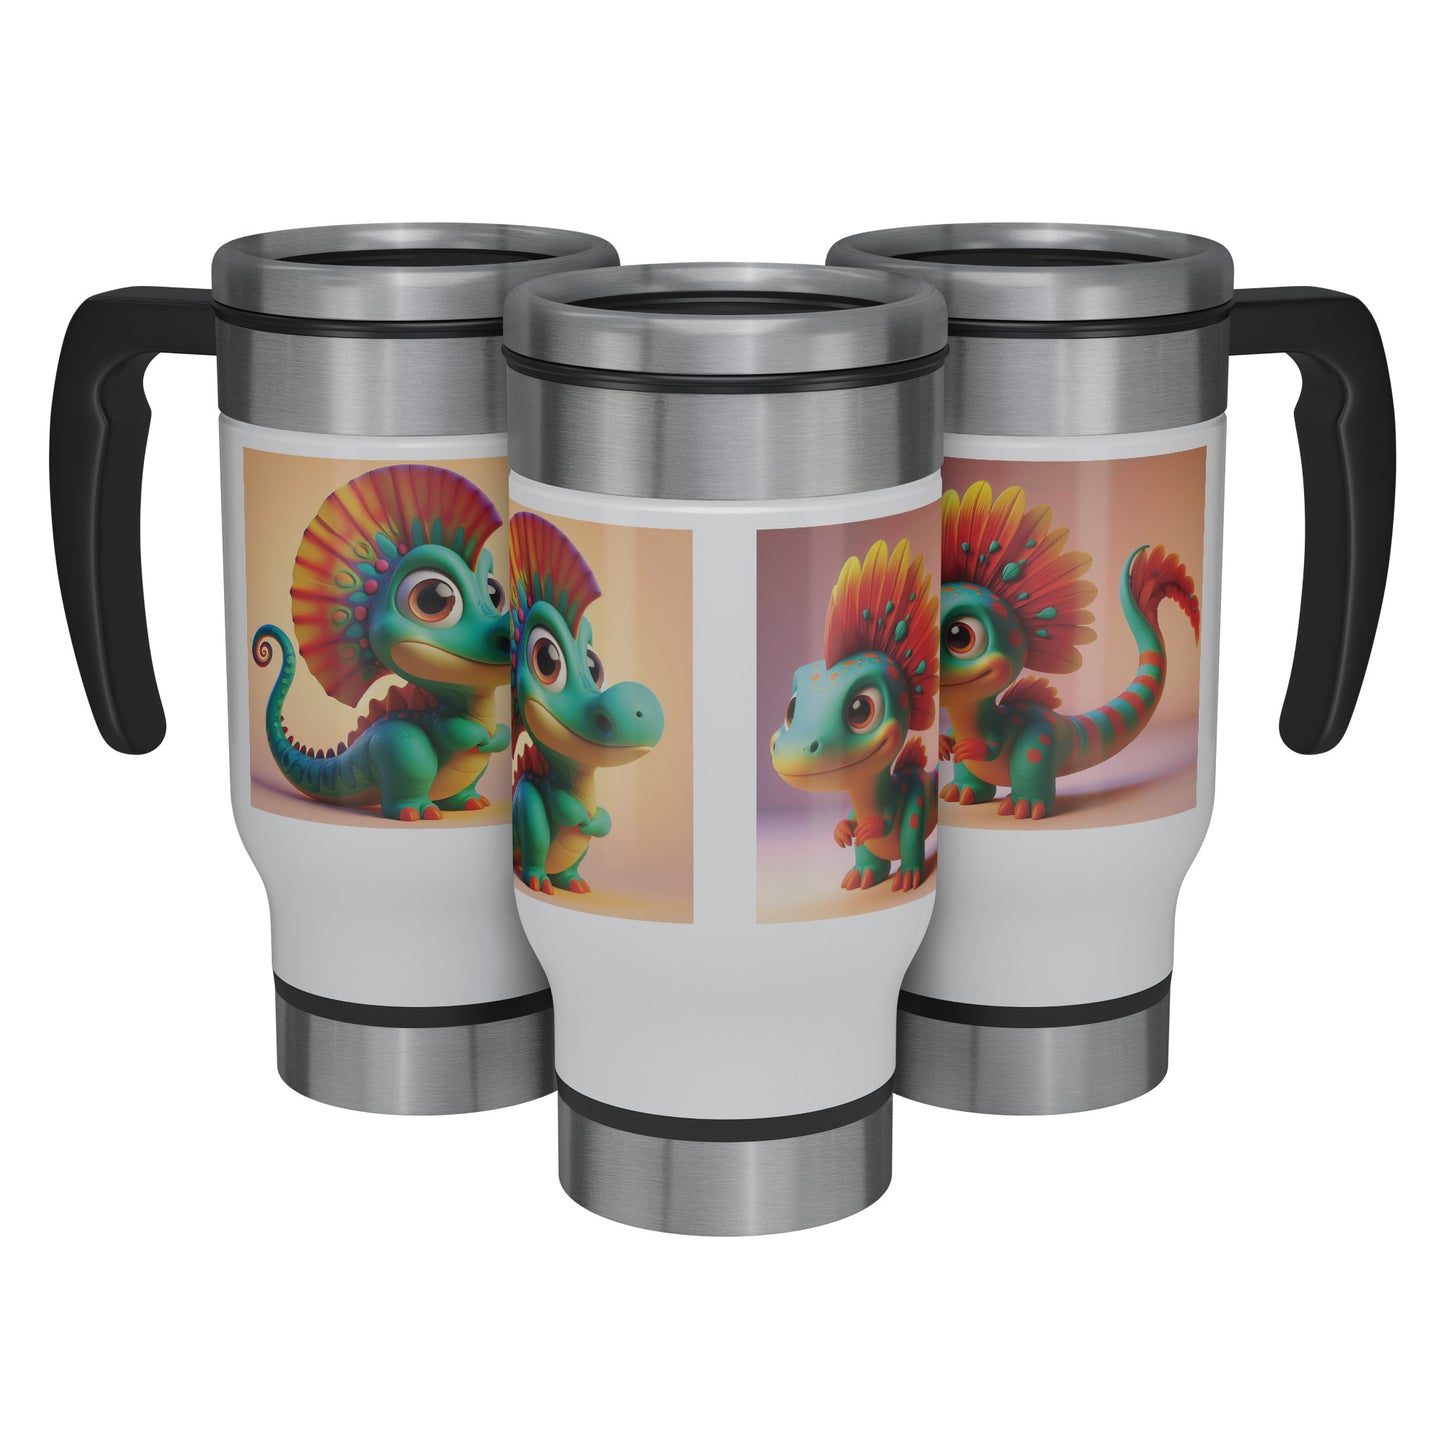 Adorable & Charming Dinosaurs - Travel Mug - Dinosaur #17